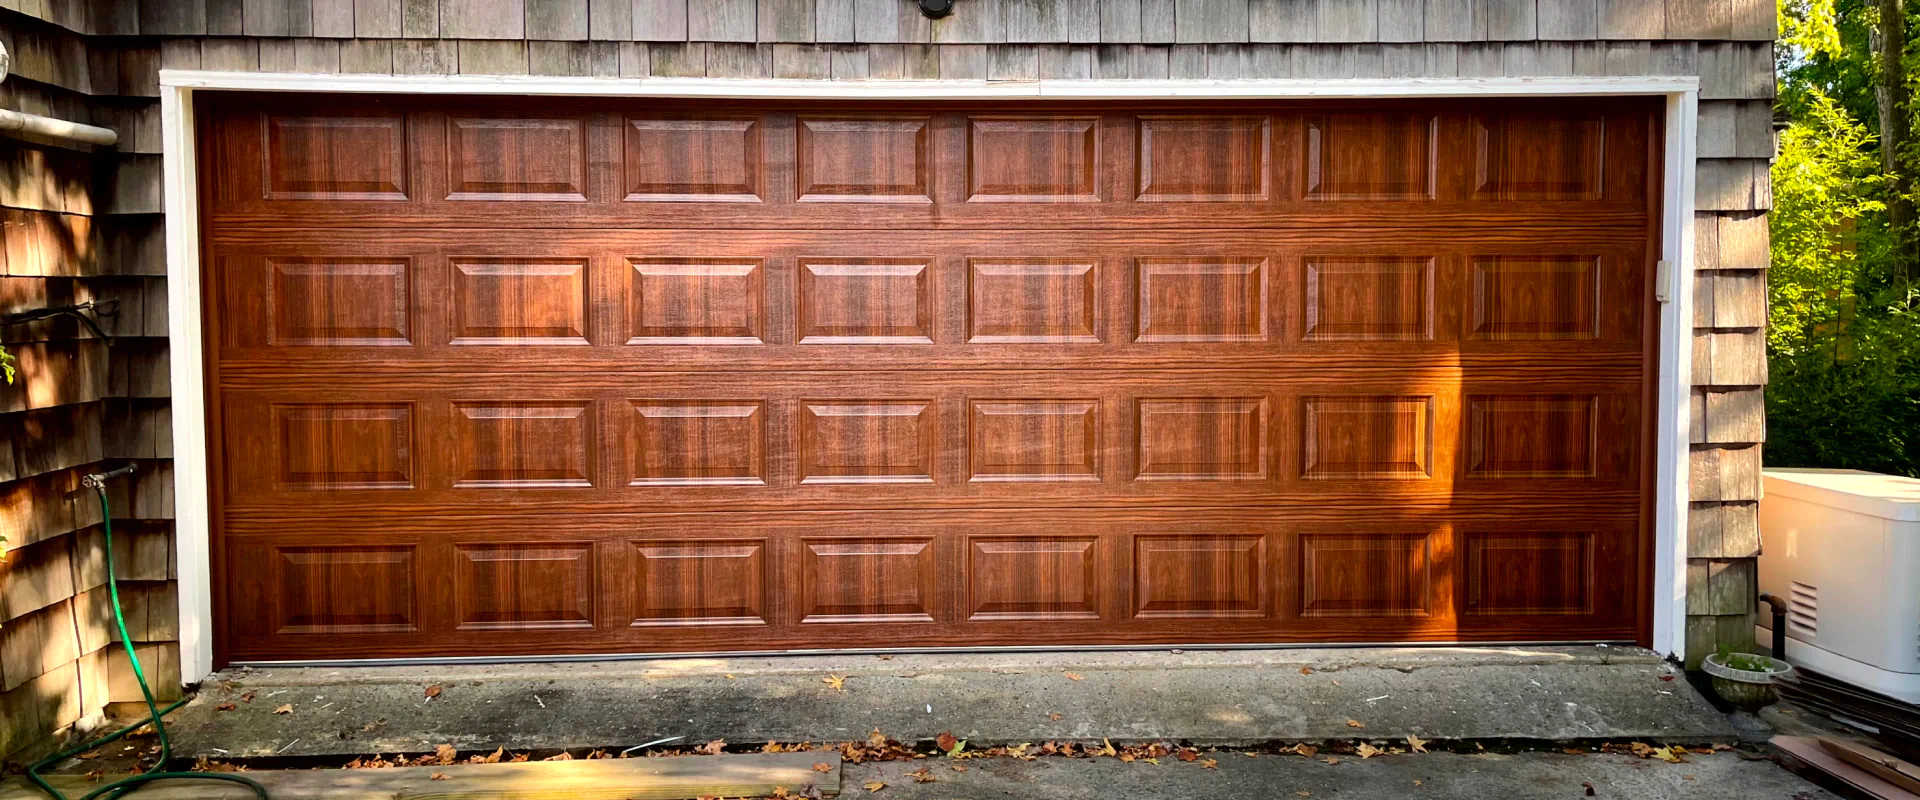 wooden garage door installed in a residential house